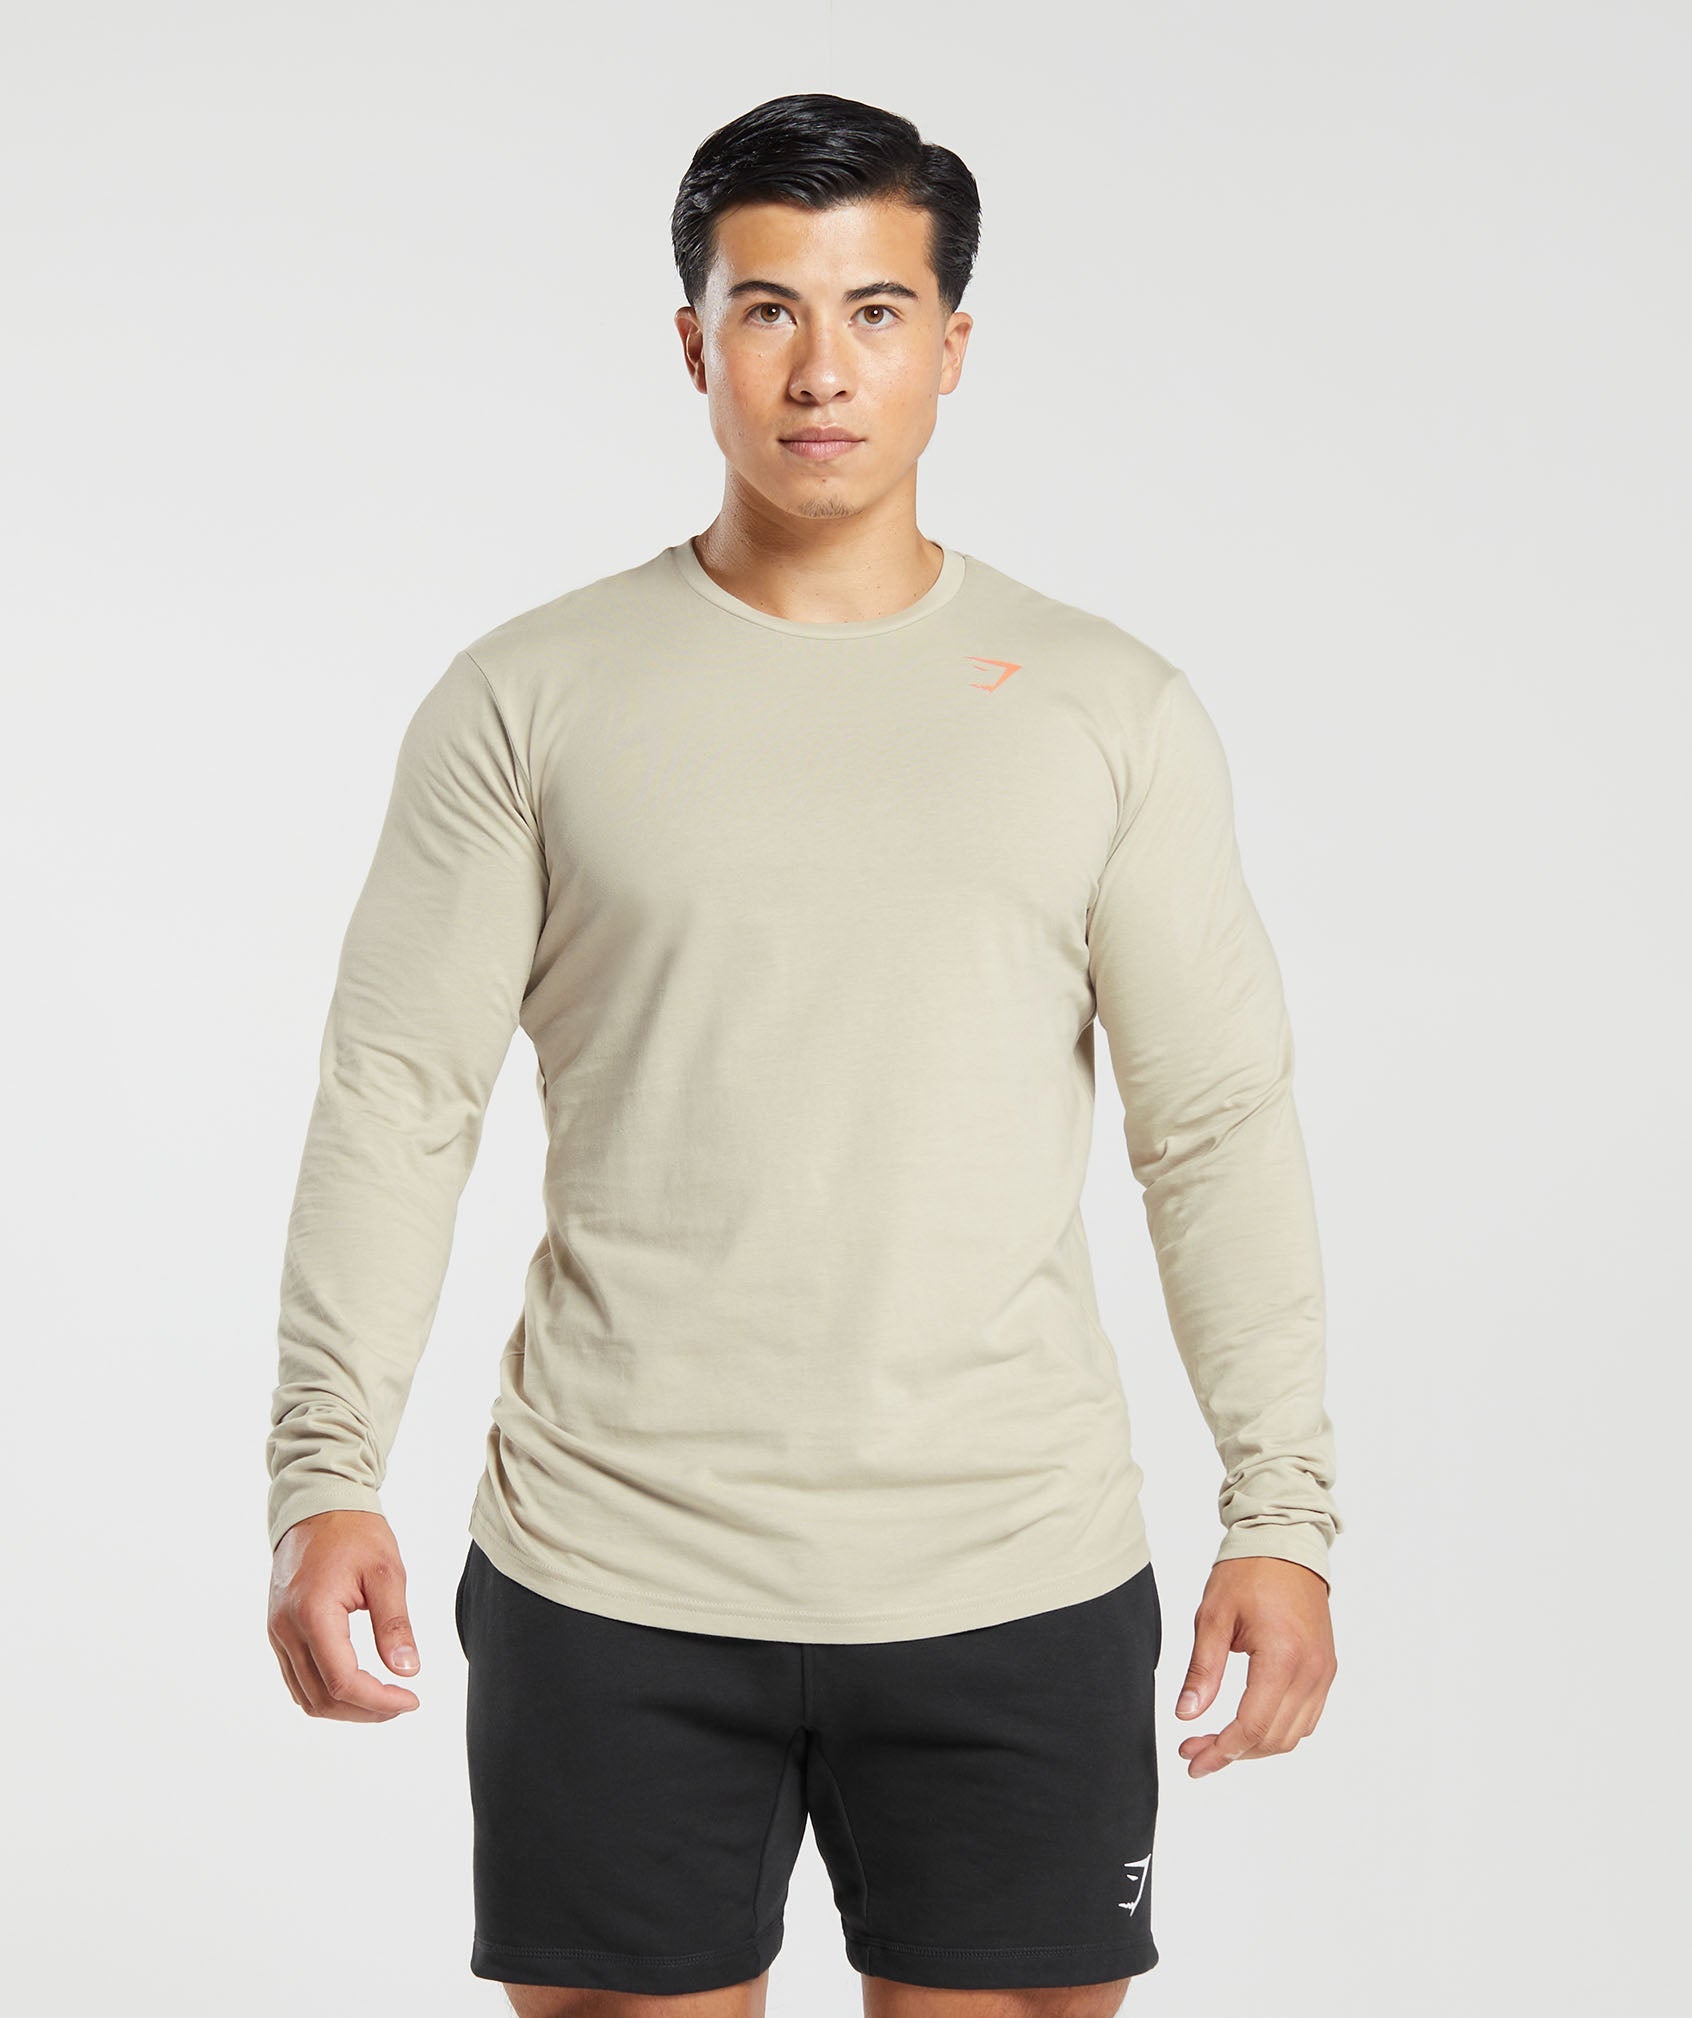 Men's Long Sleeve Workout Shirts & Tops - Gymshark